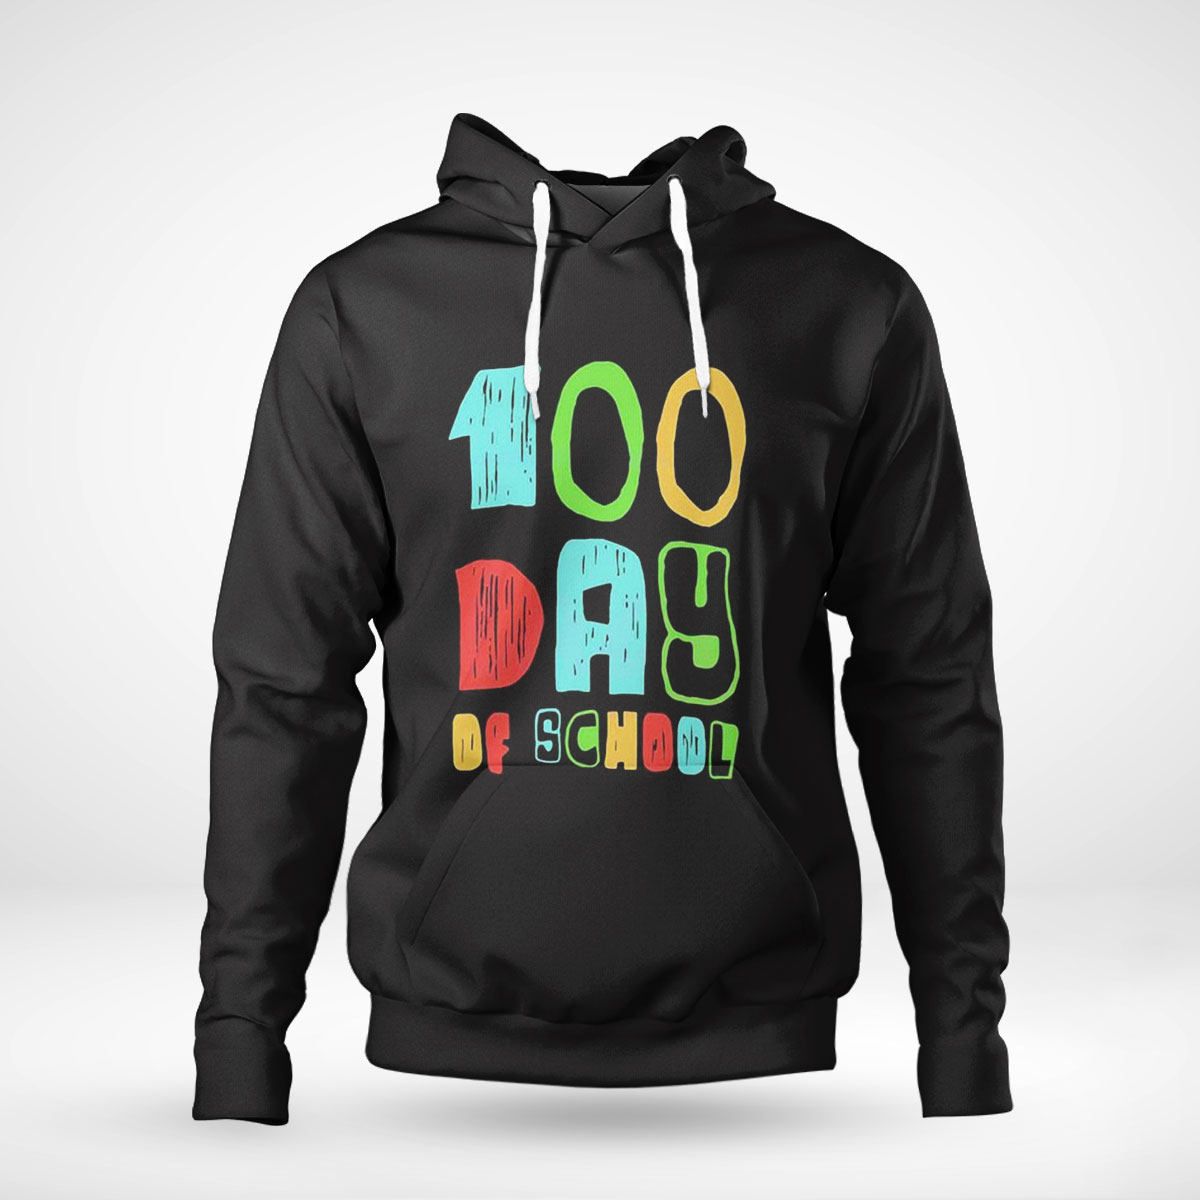 100 Day Of School For Teacher Shirt Ladies Tee